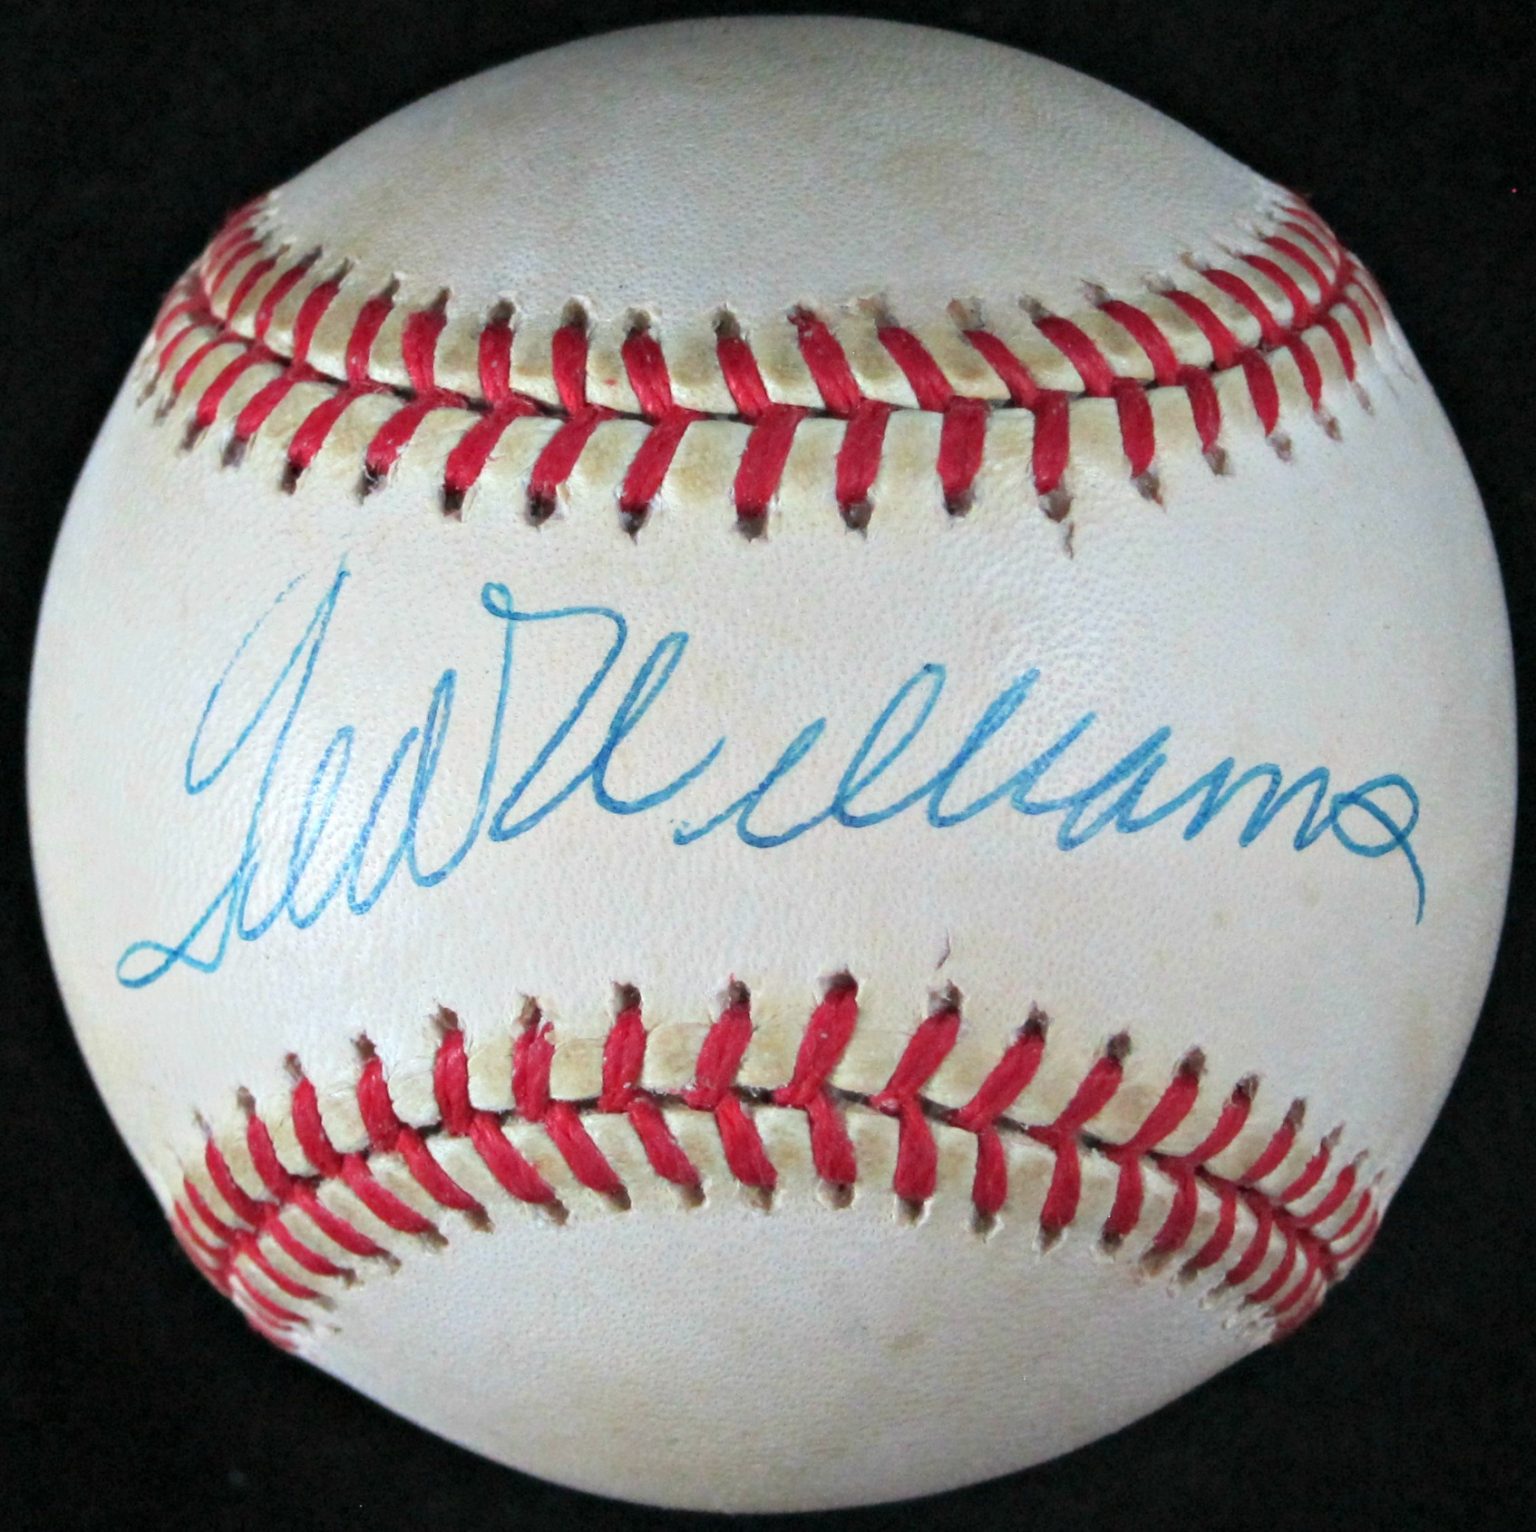 Ted Williams Autographed Baseball - Memorabilia Center